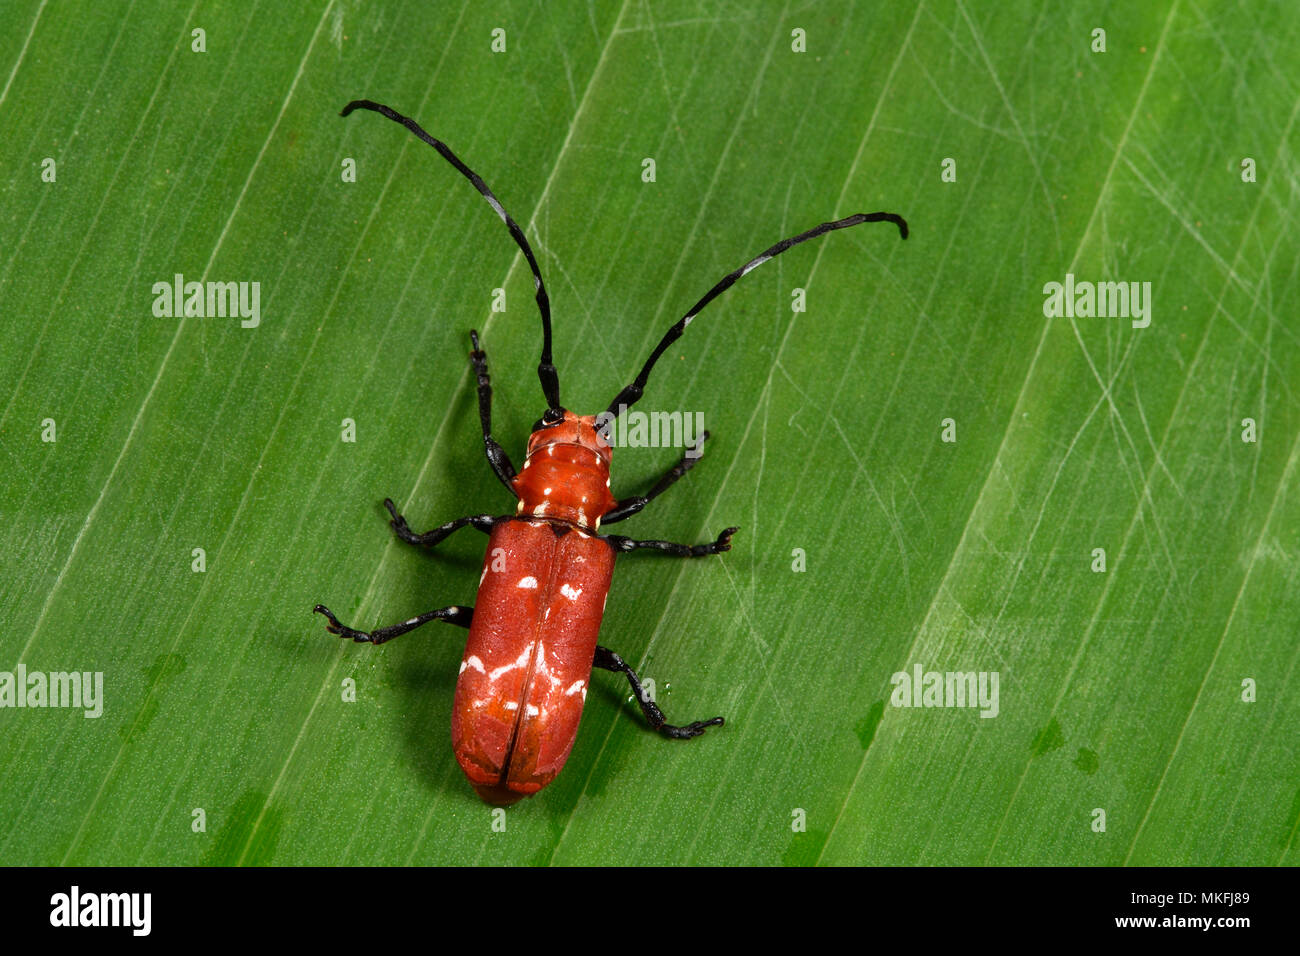 Coleoptera, Andasibe, Perinet, Alaotra-Mangoro Region, Madagascar Stock Photo